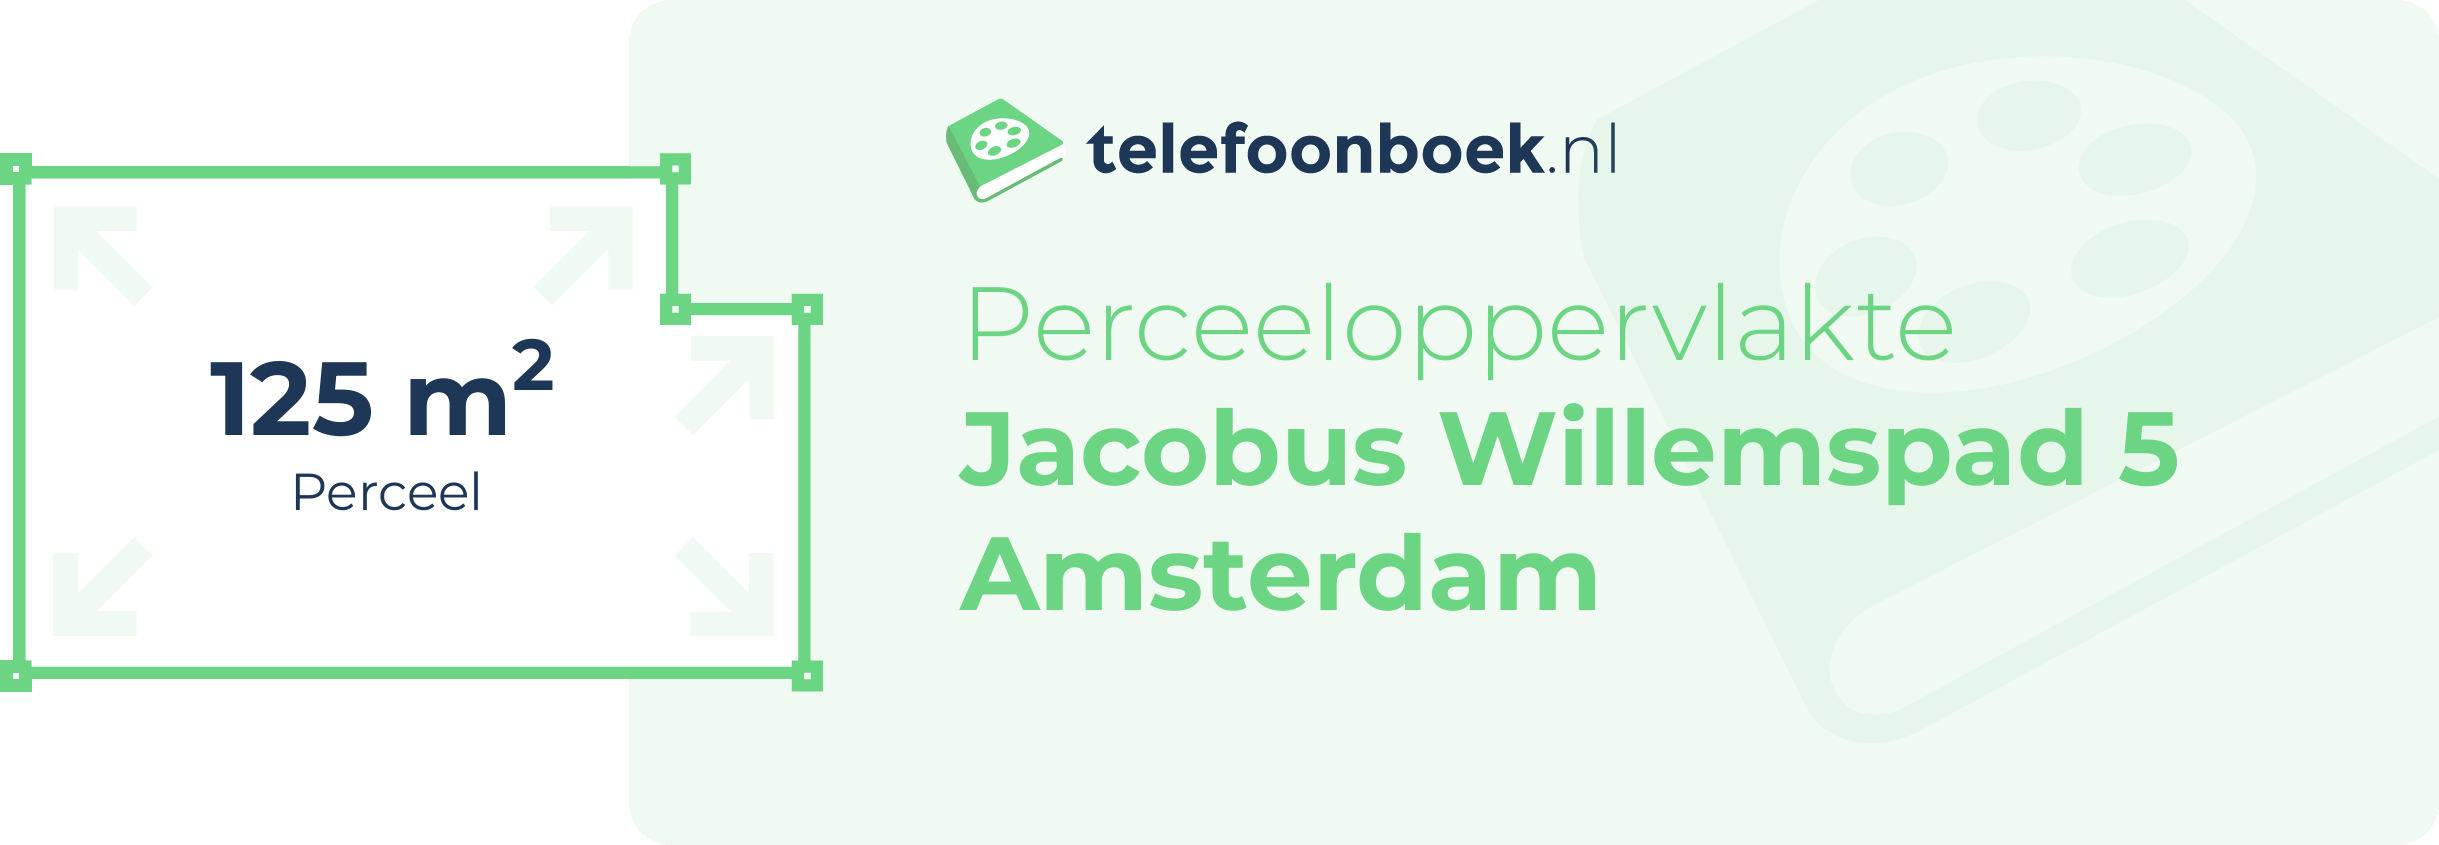 Perceeloppervlakte Jacobus Willemspad 5 Amsterdam